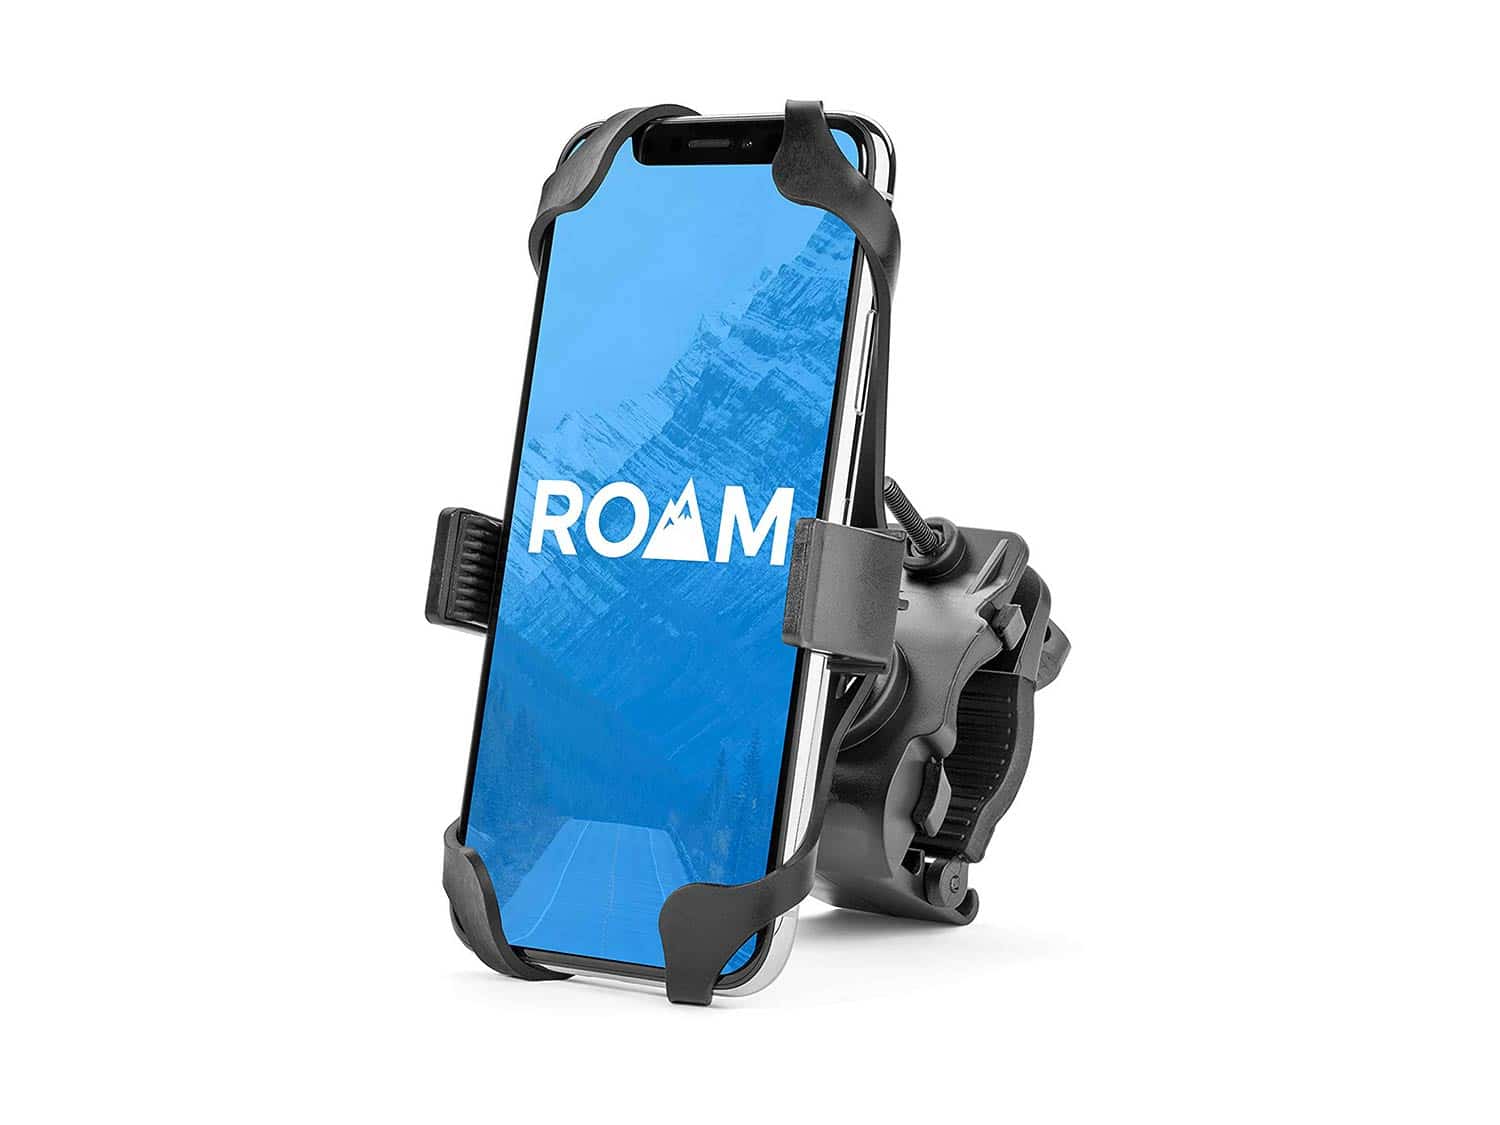 Roam Universal Phone Mount